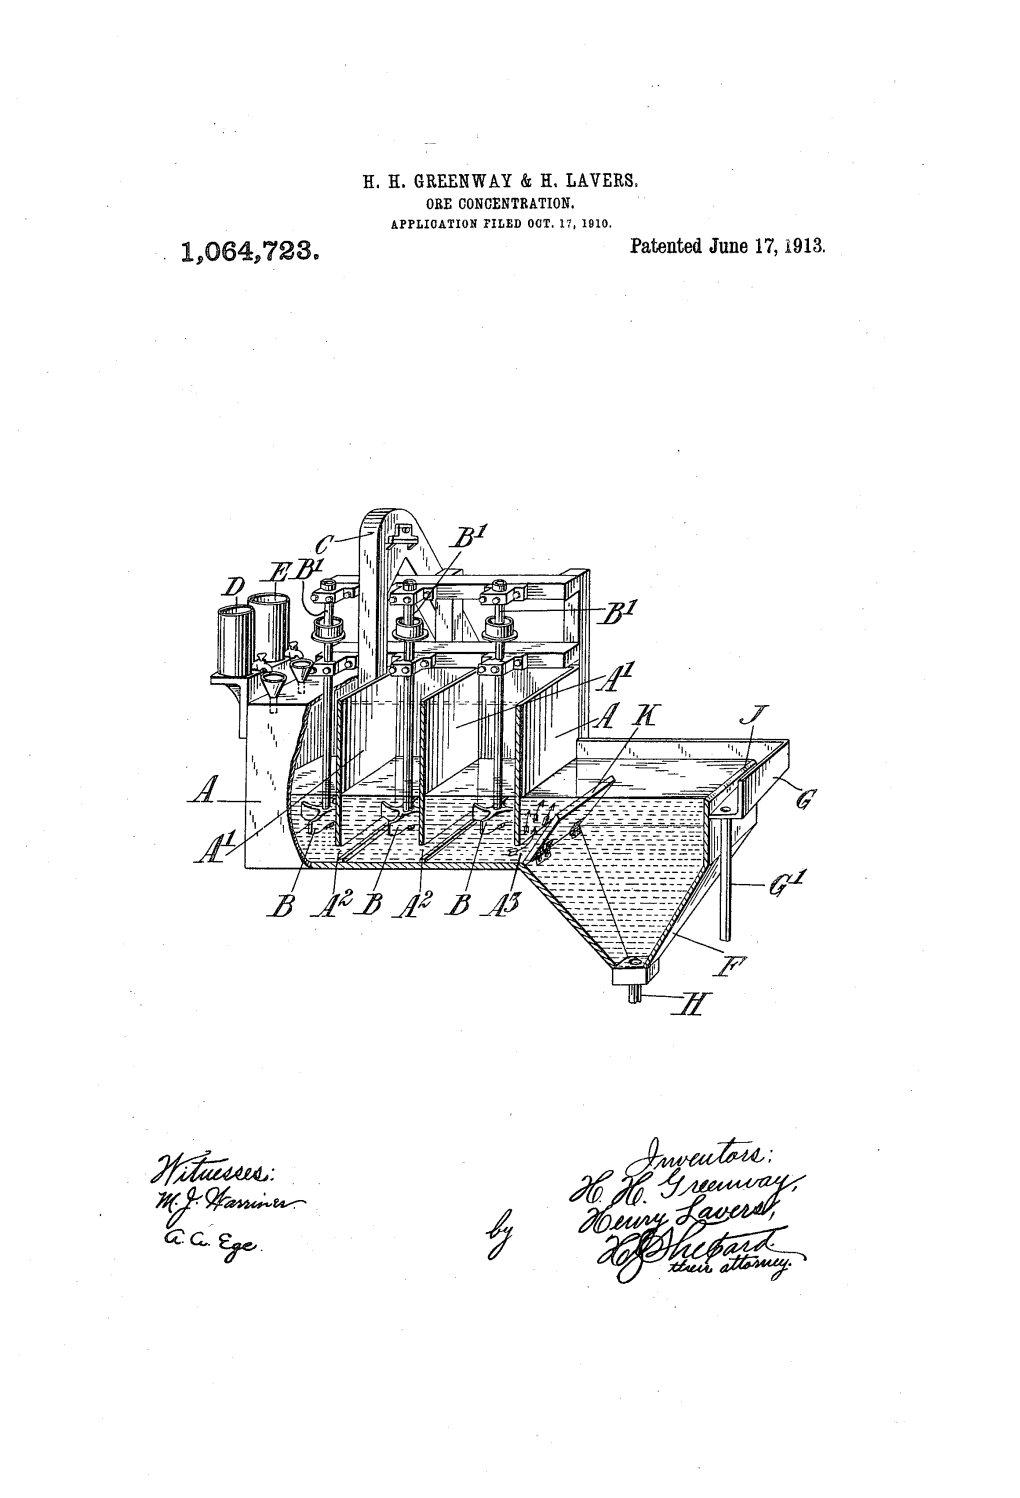 1,064,723, Patented June 17, 1913